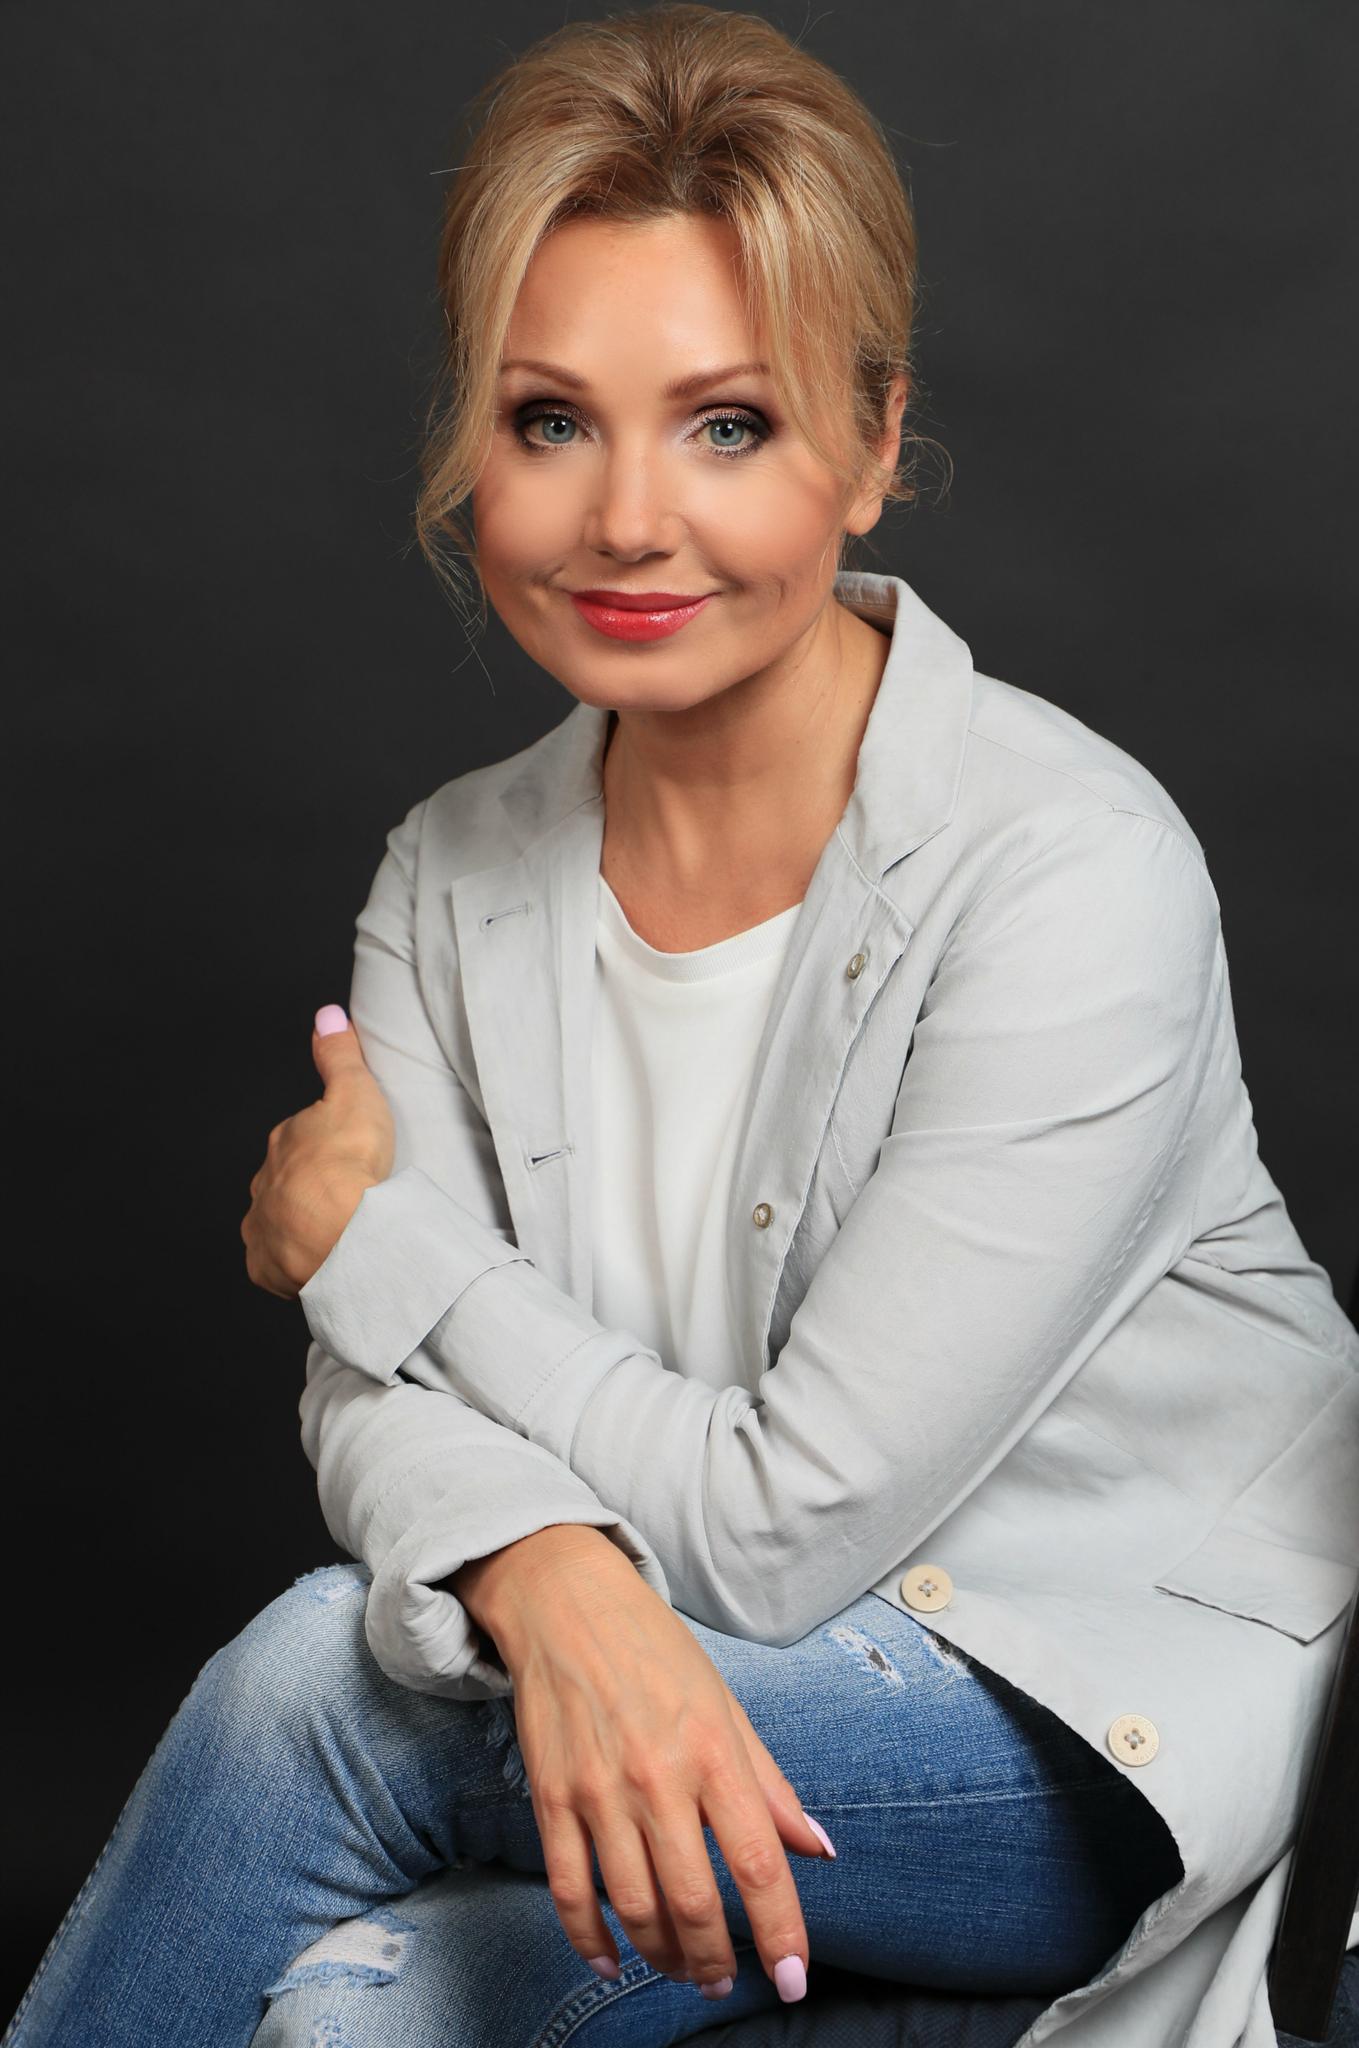 Ирина Климова певица